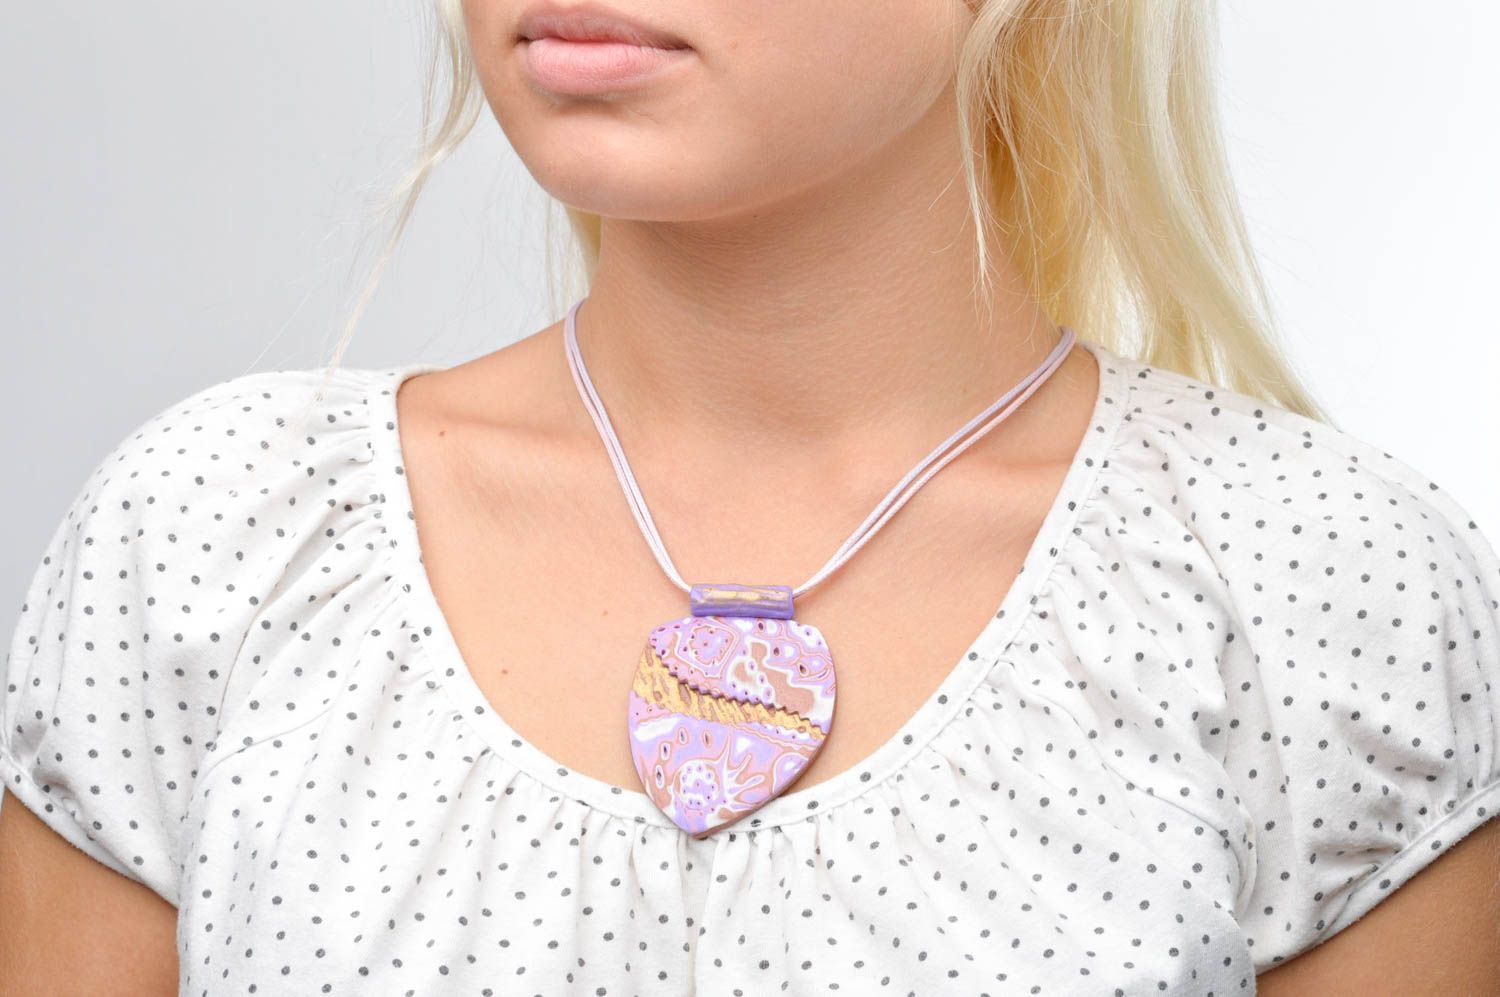 Stylish handmade plastic pendant costume jewelry neck accessories ideas photo 3